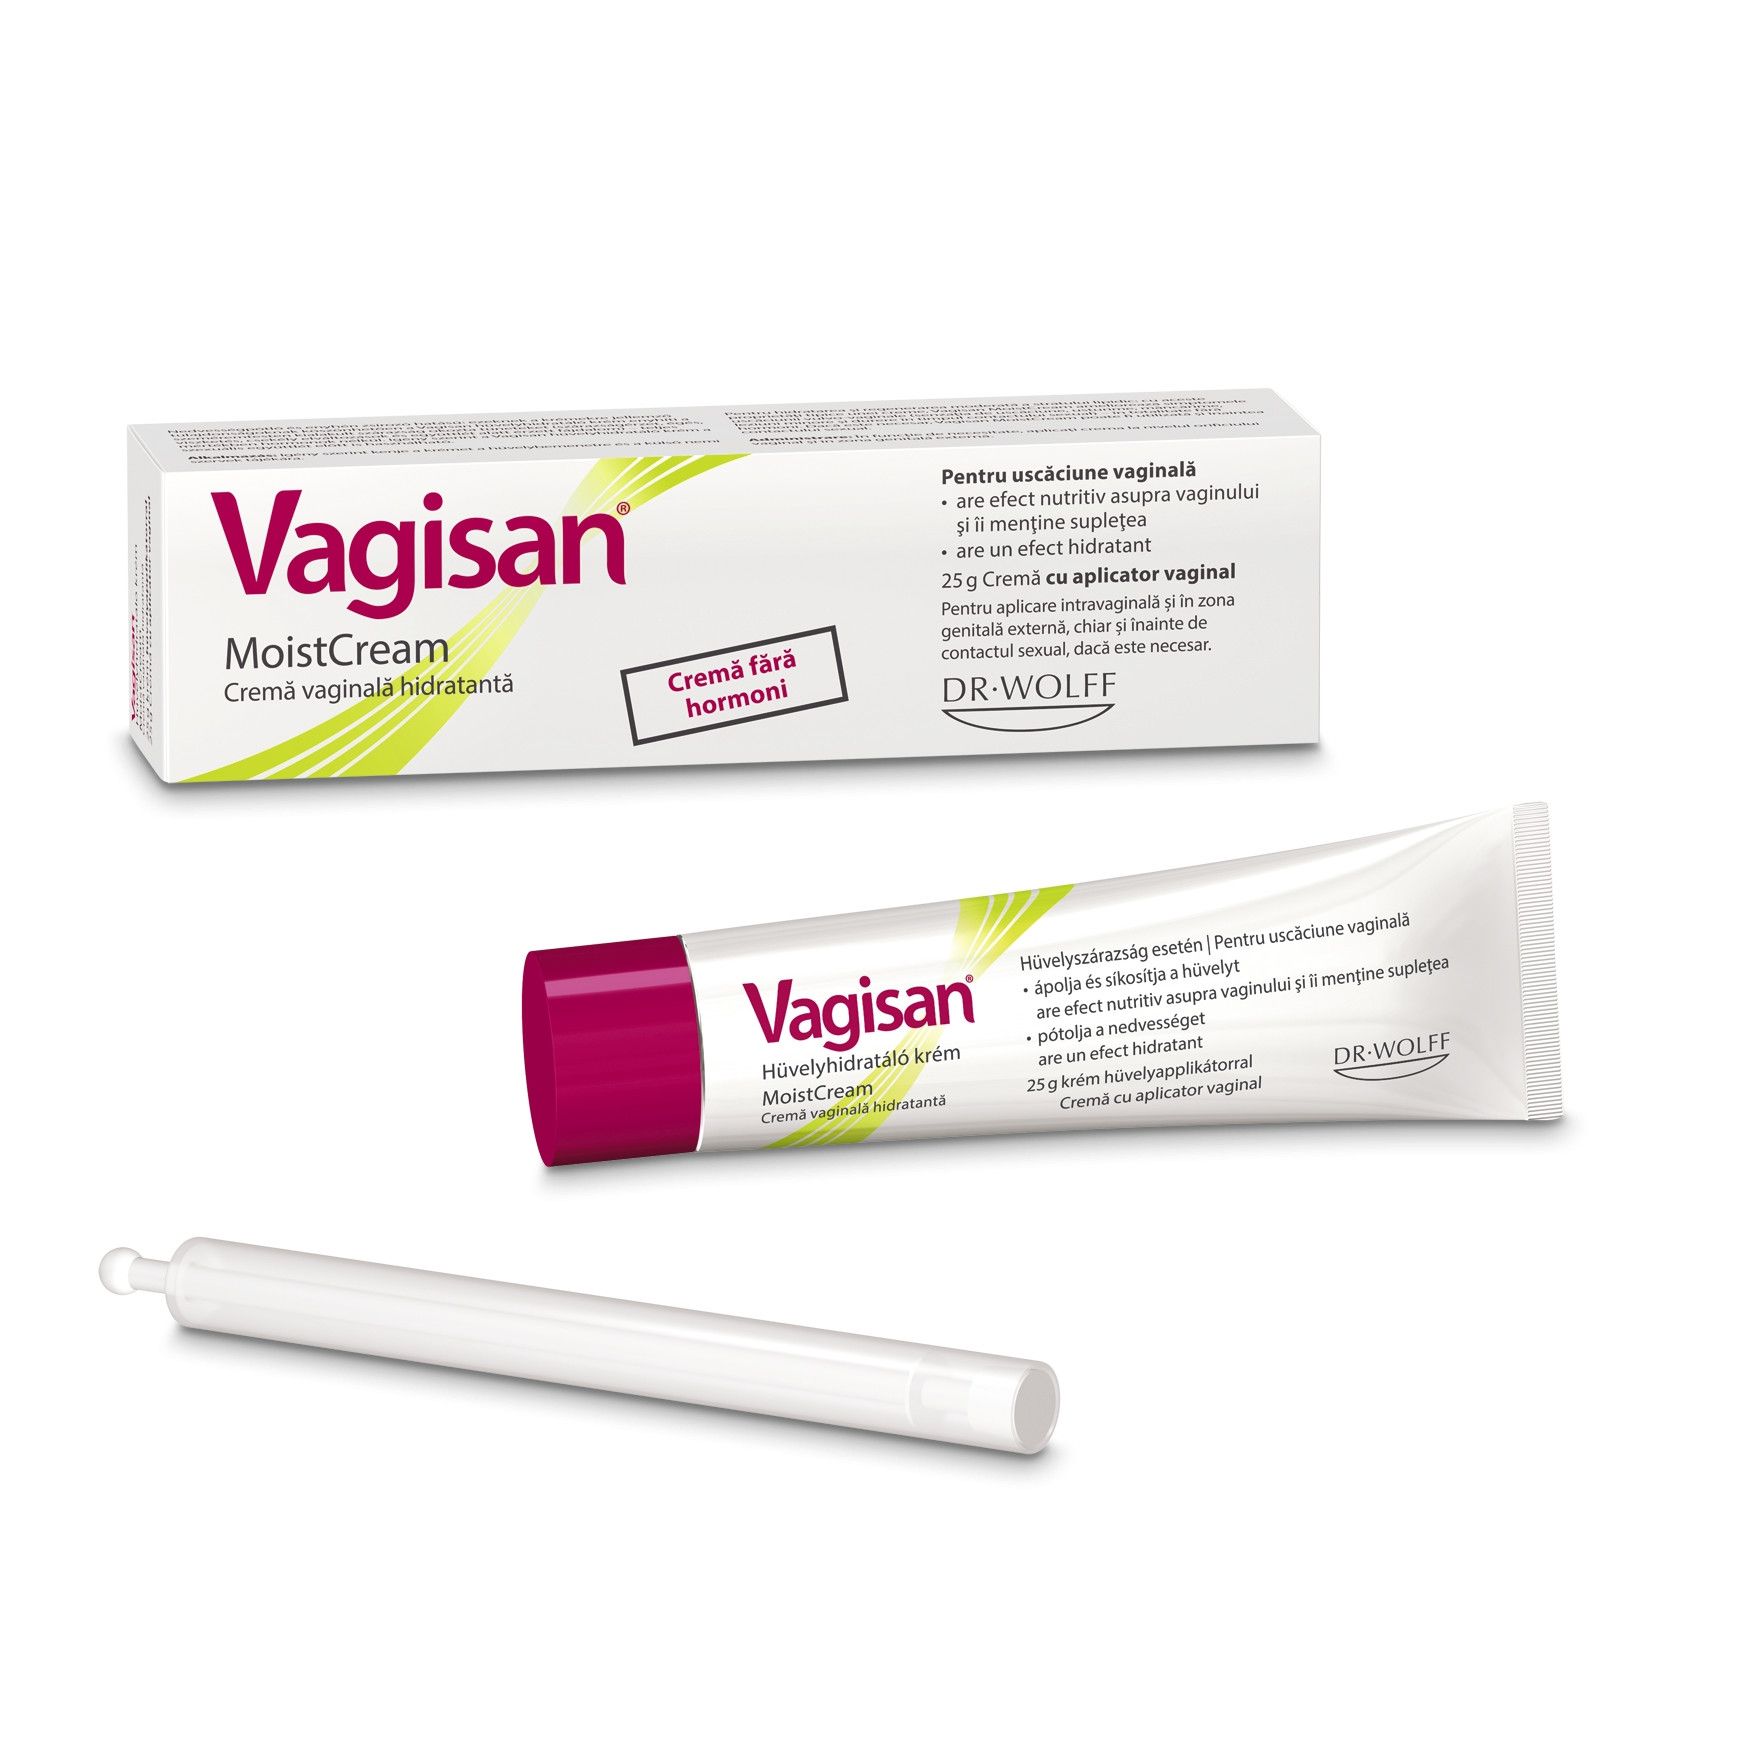 Vagisan moistcream -crema vaginala,25g